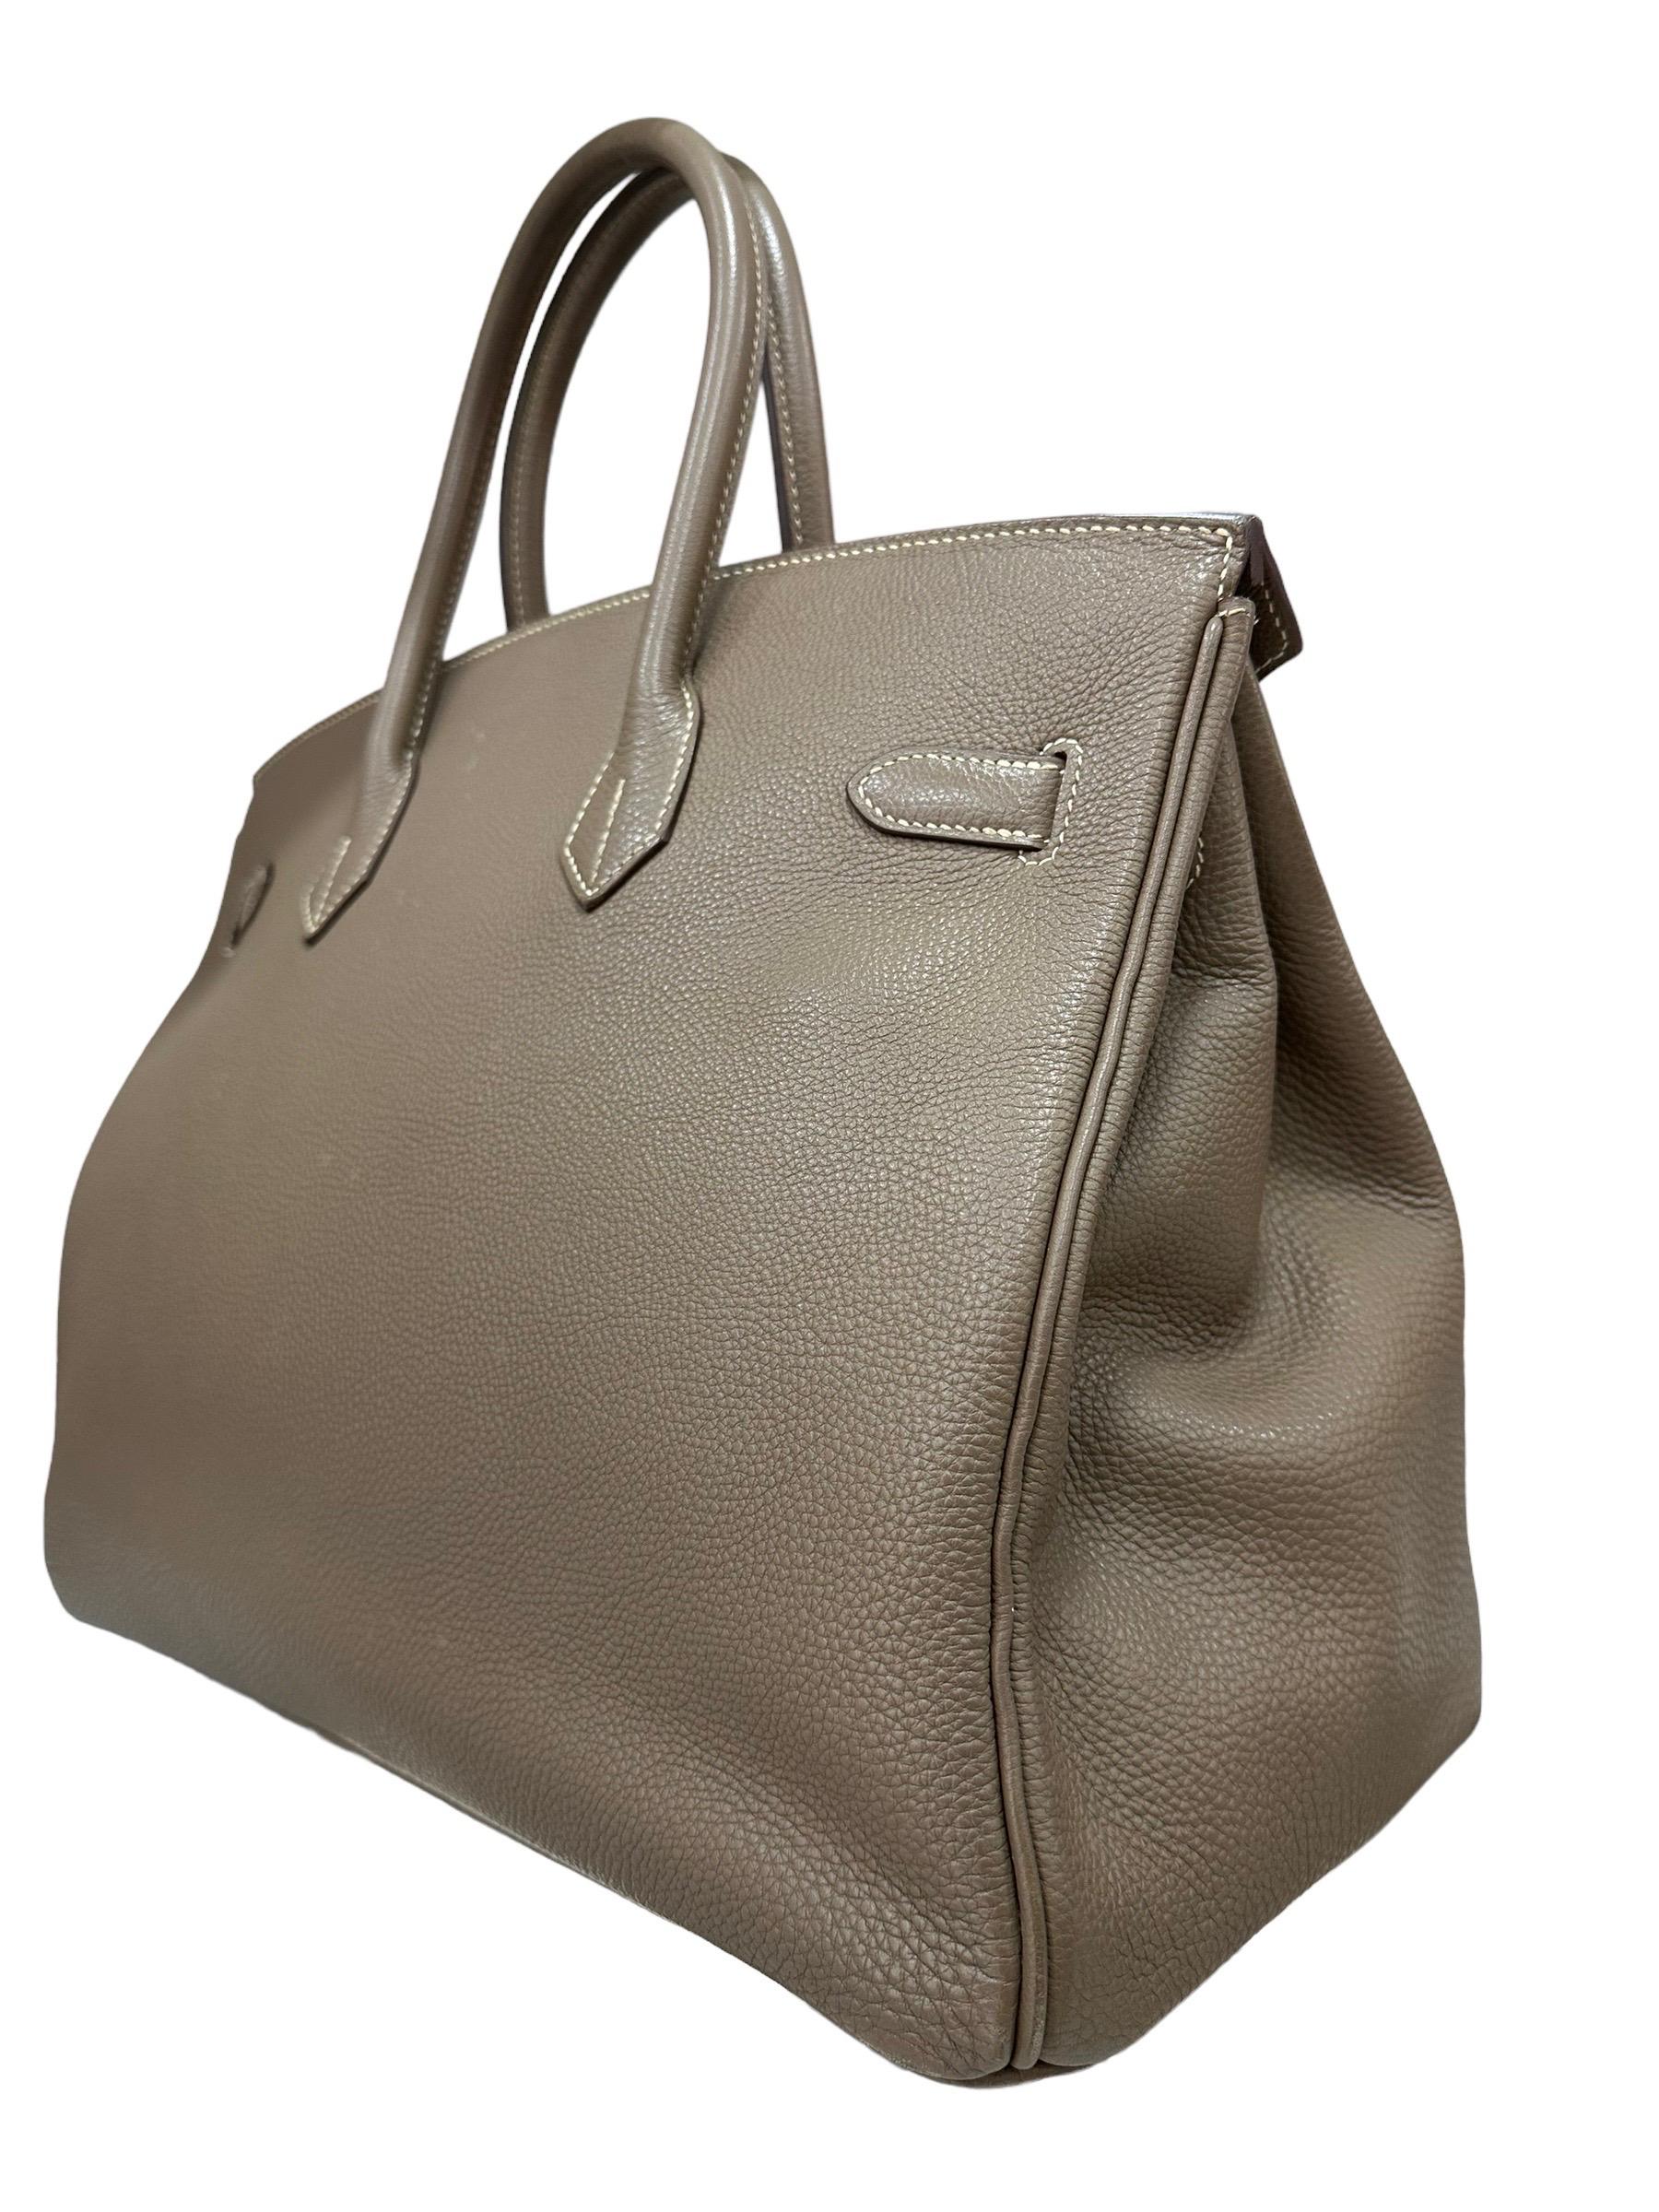 2008 Hermès Birkin 35 Togo Leather Toundra Top Handle Bag en vente 2